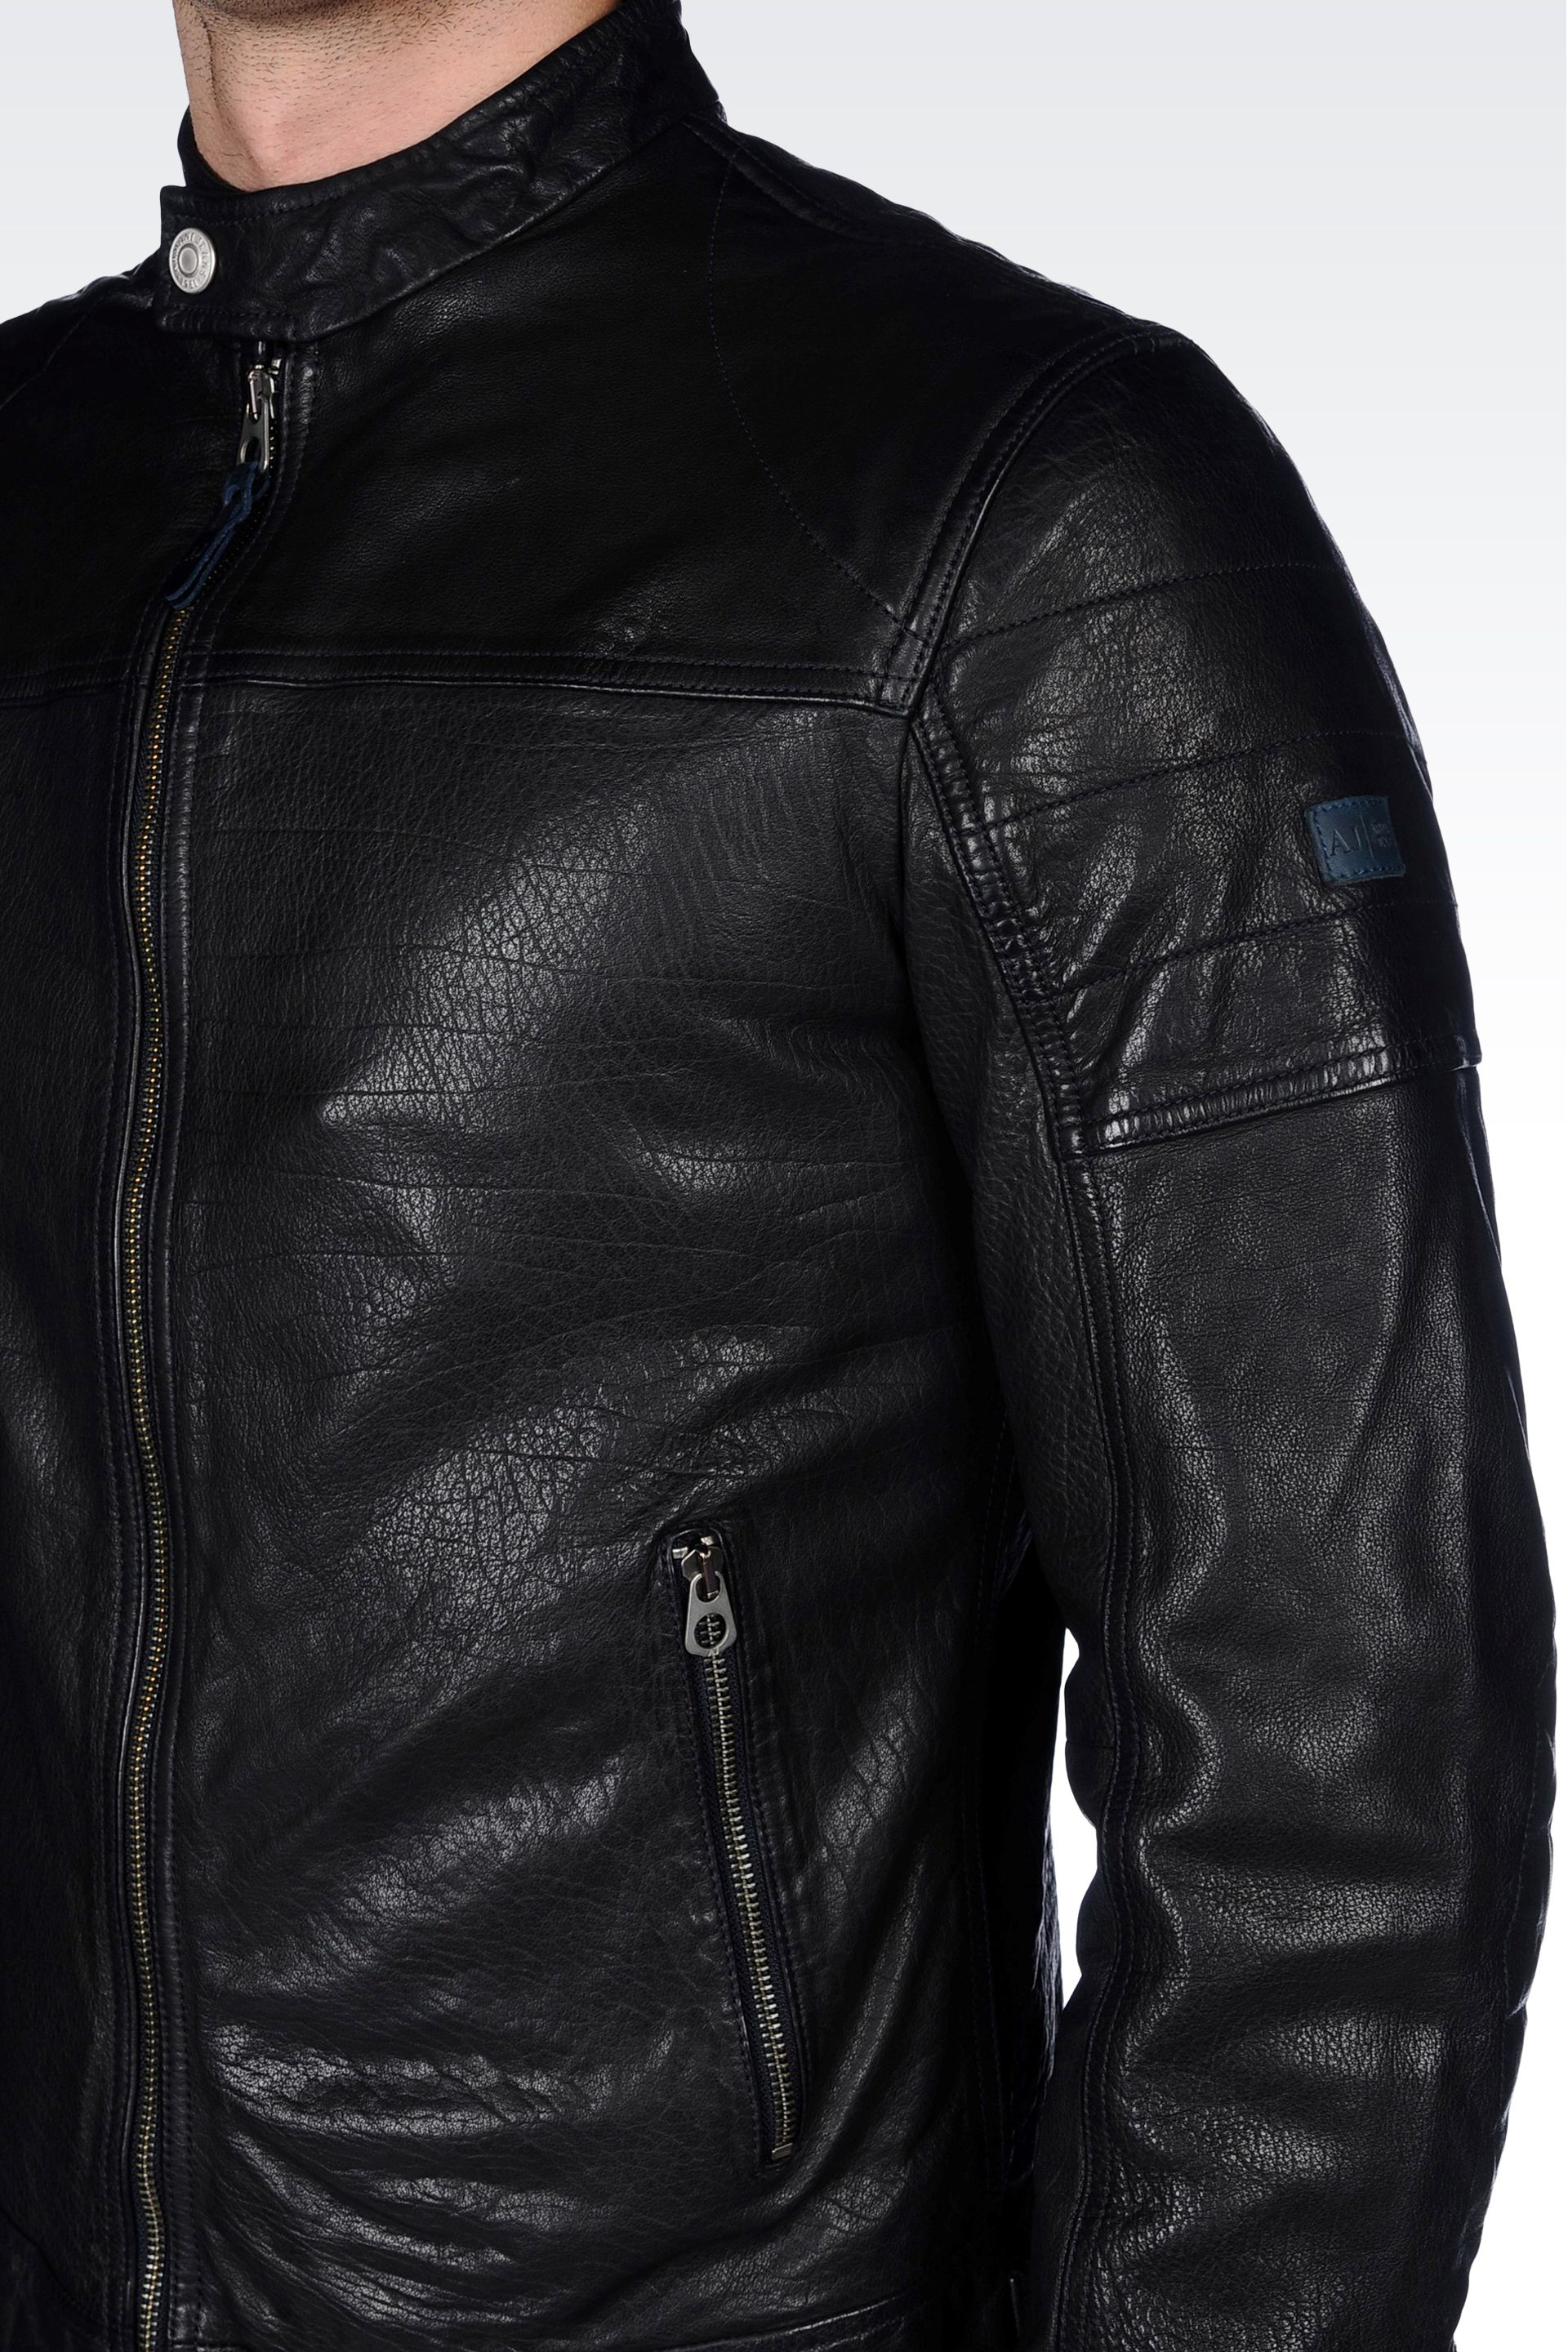 Armani Puffer Jacket Men's Sale Clearance, 57% OFF | www.colegiogamarra.com